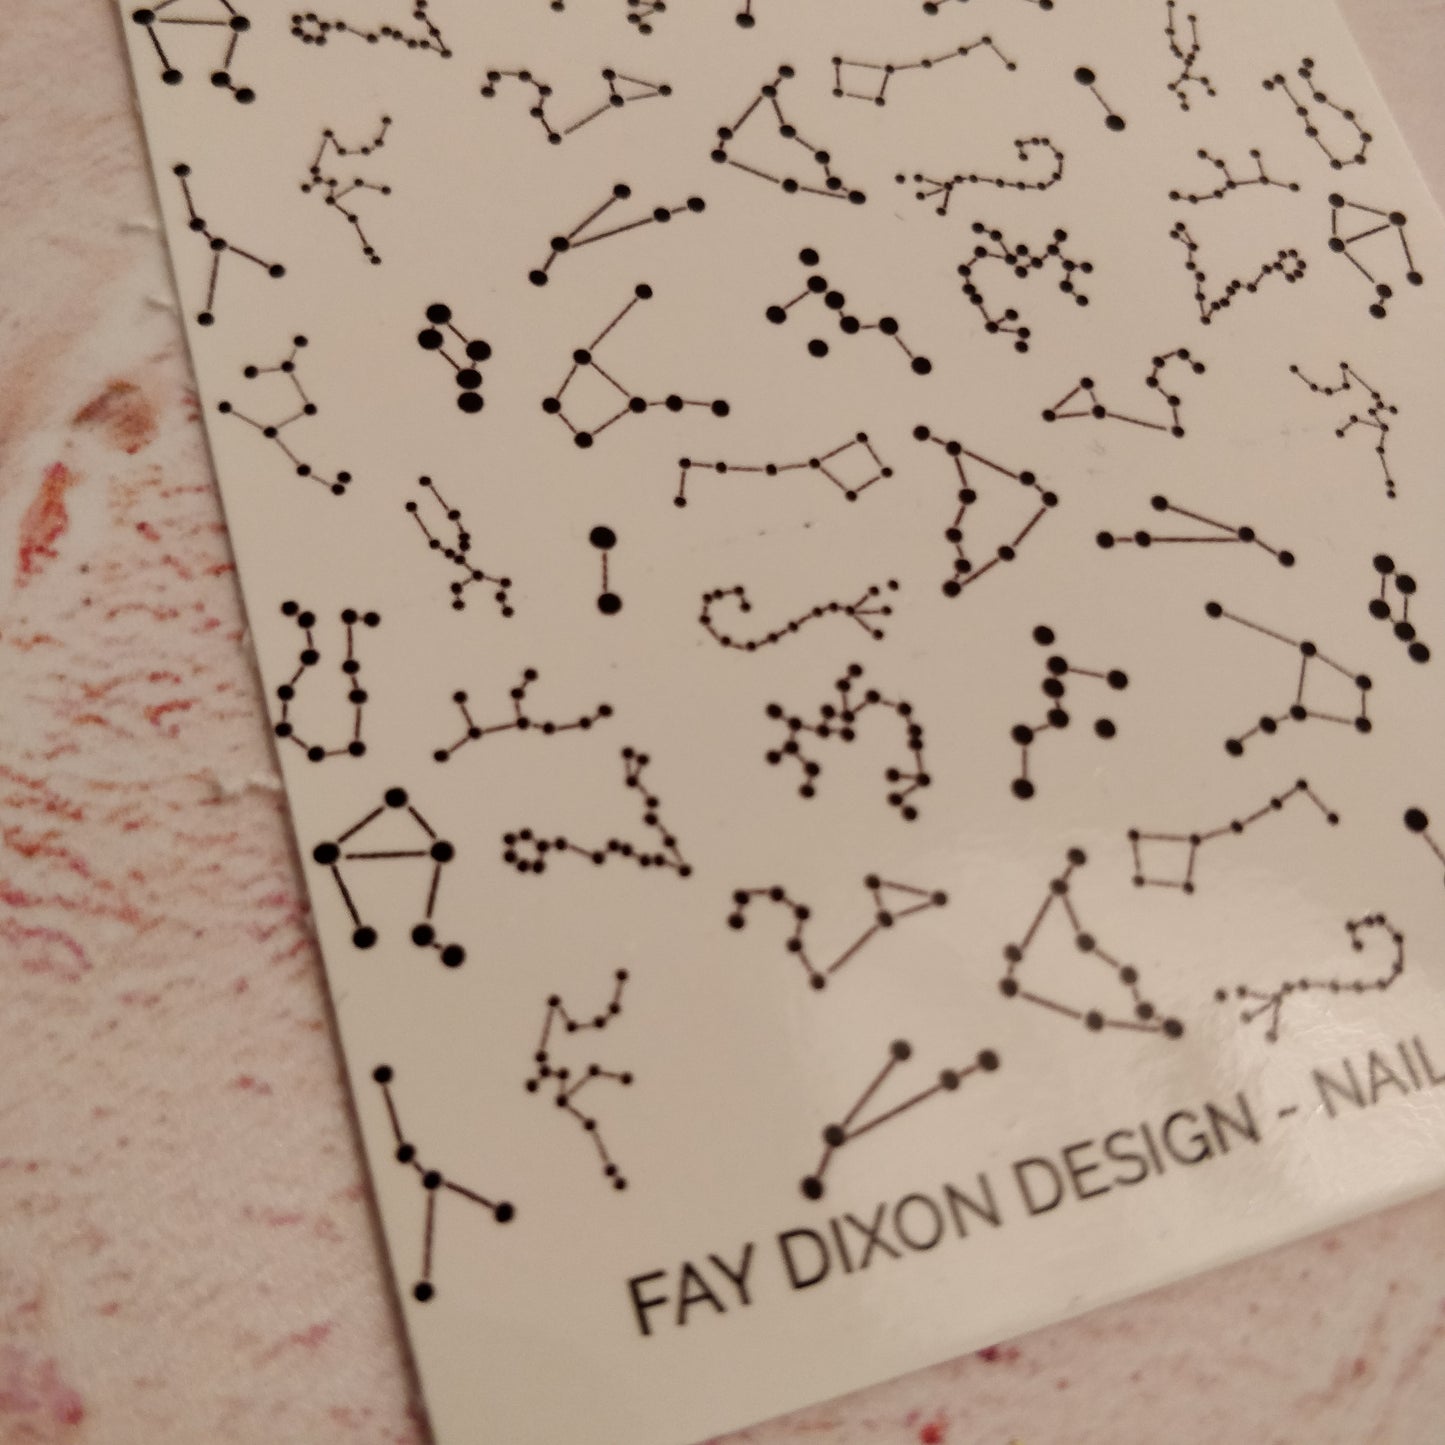 Constellation Waterslide Nail Decals - Fay Dixon Design